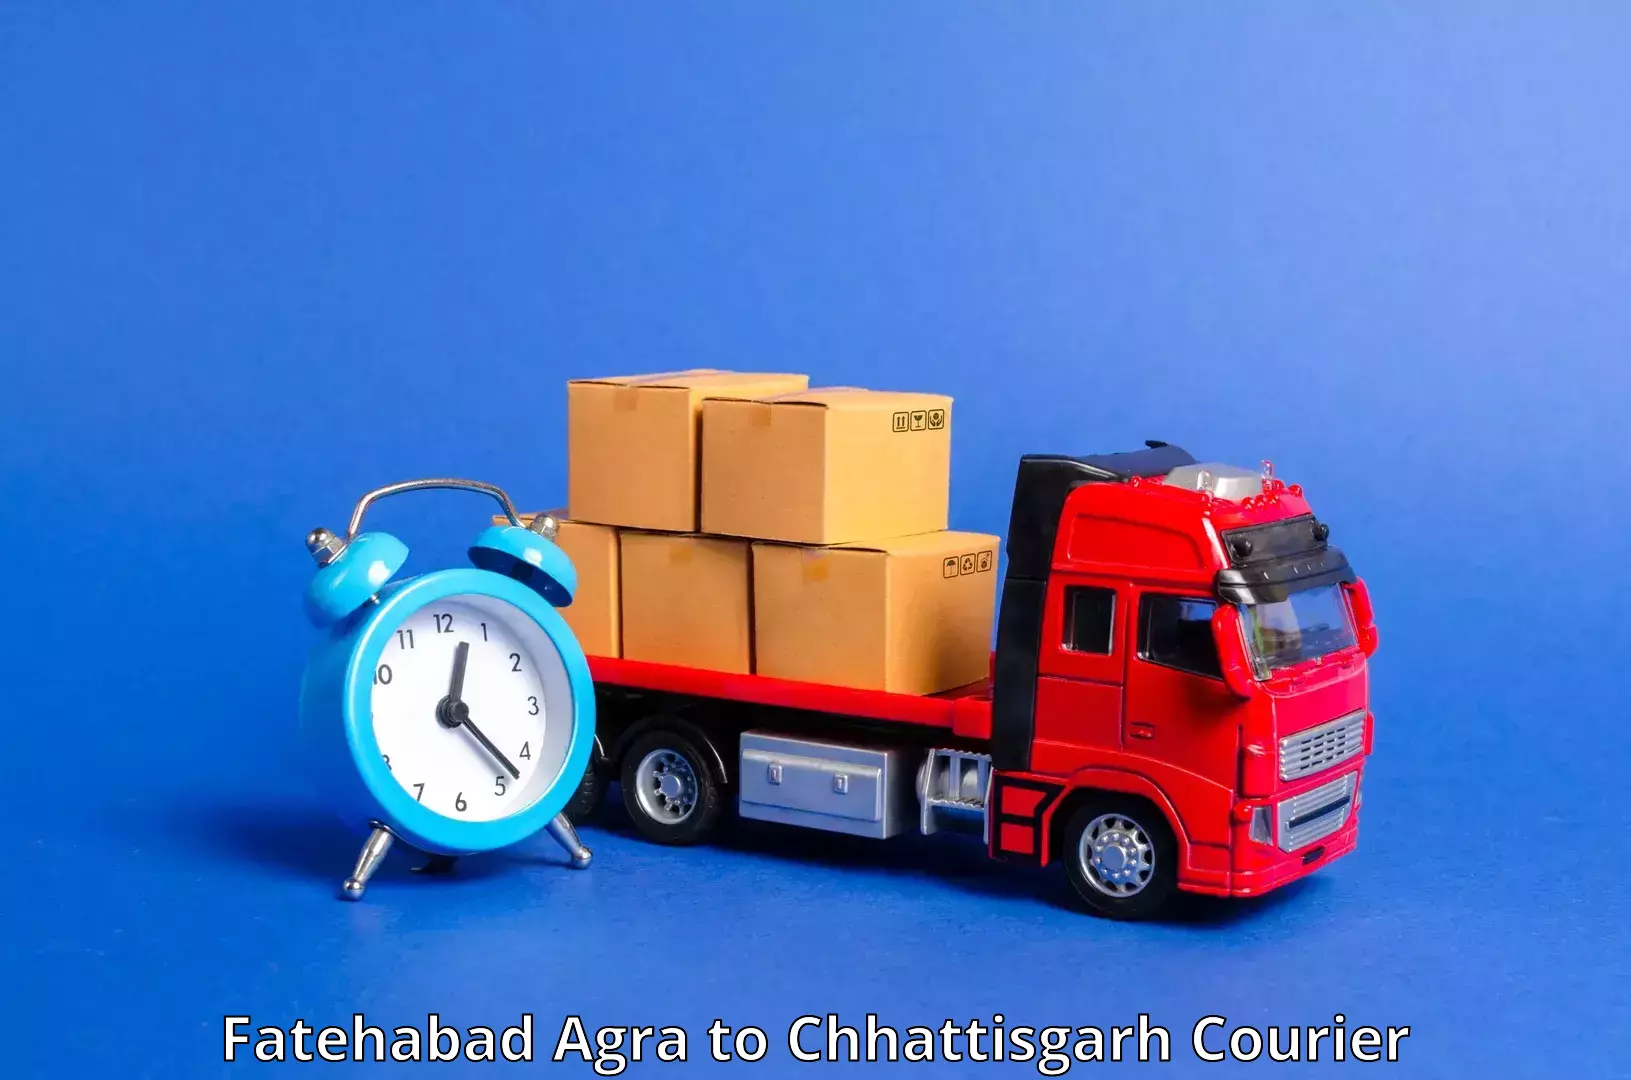 Efficient order fulfillment Fatehabad Agra to Chhattisgarh